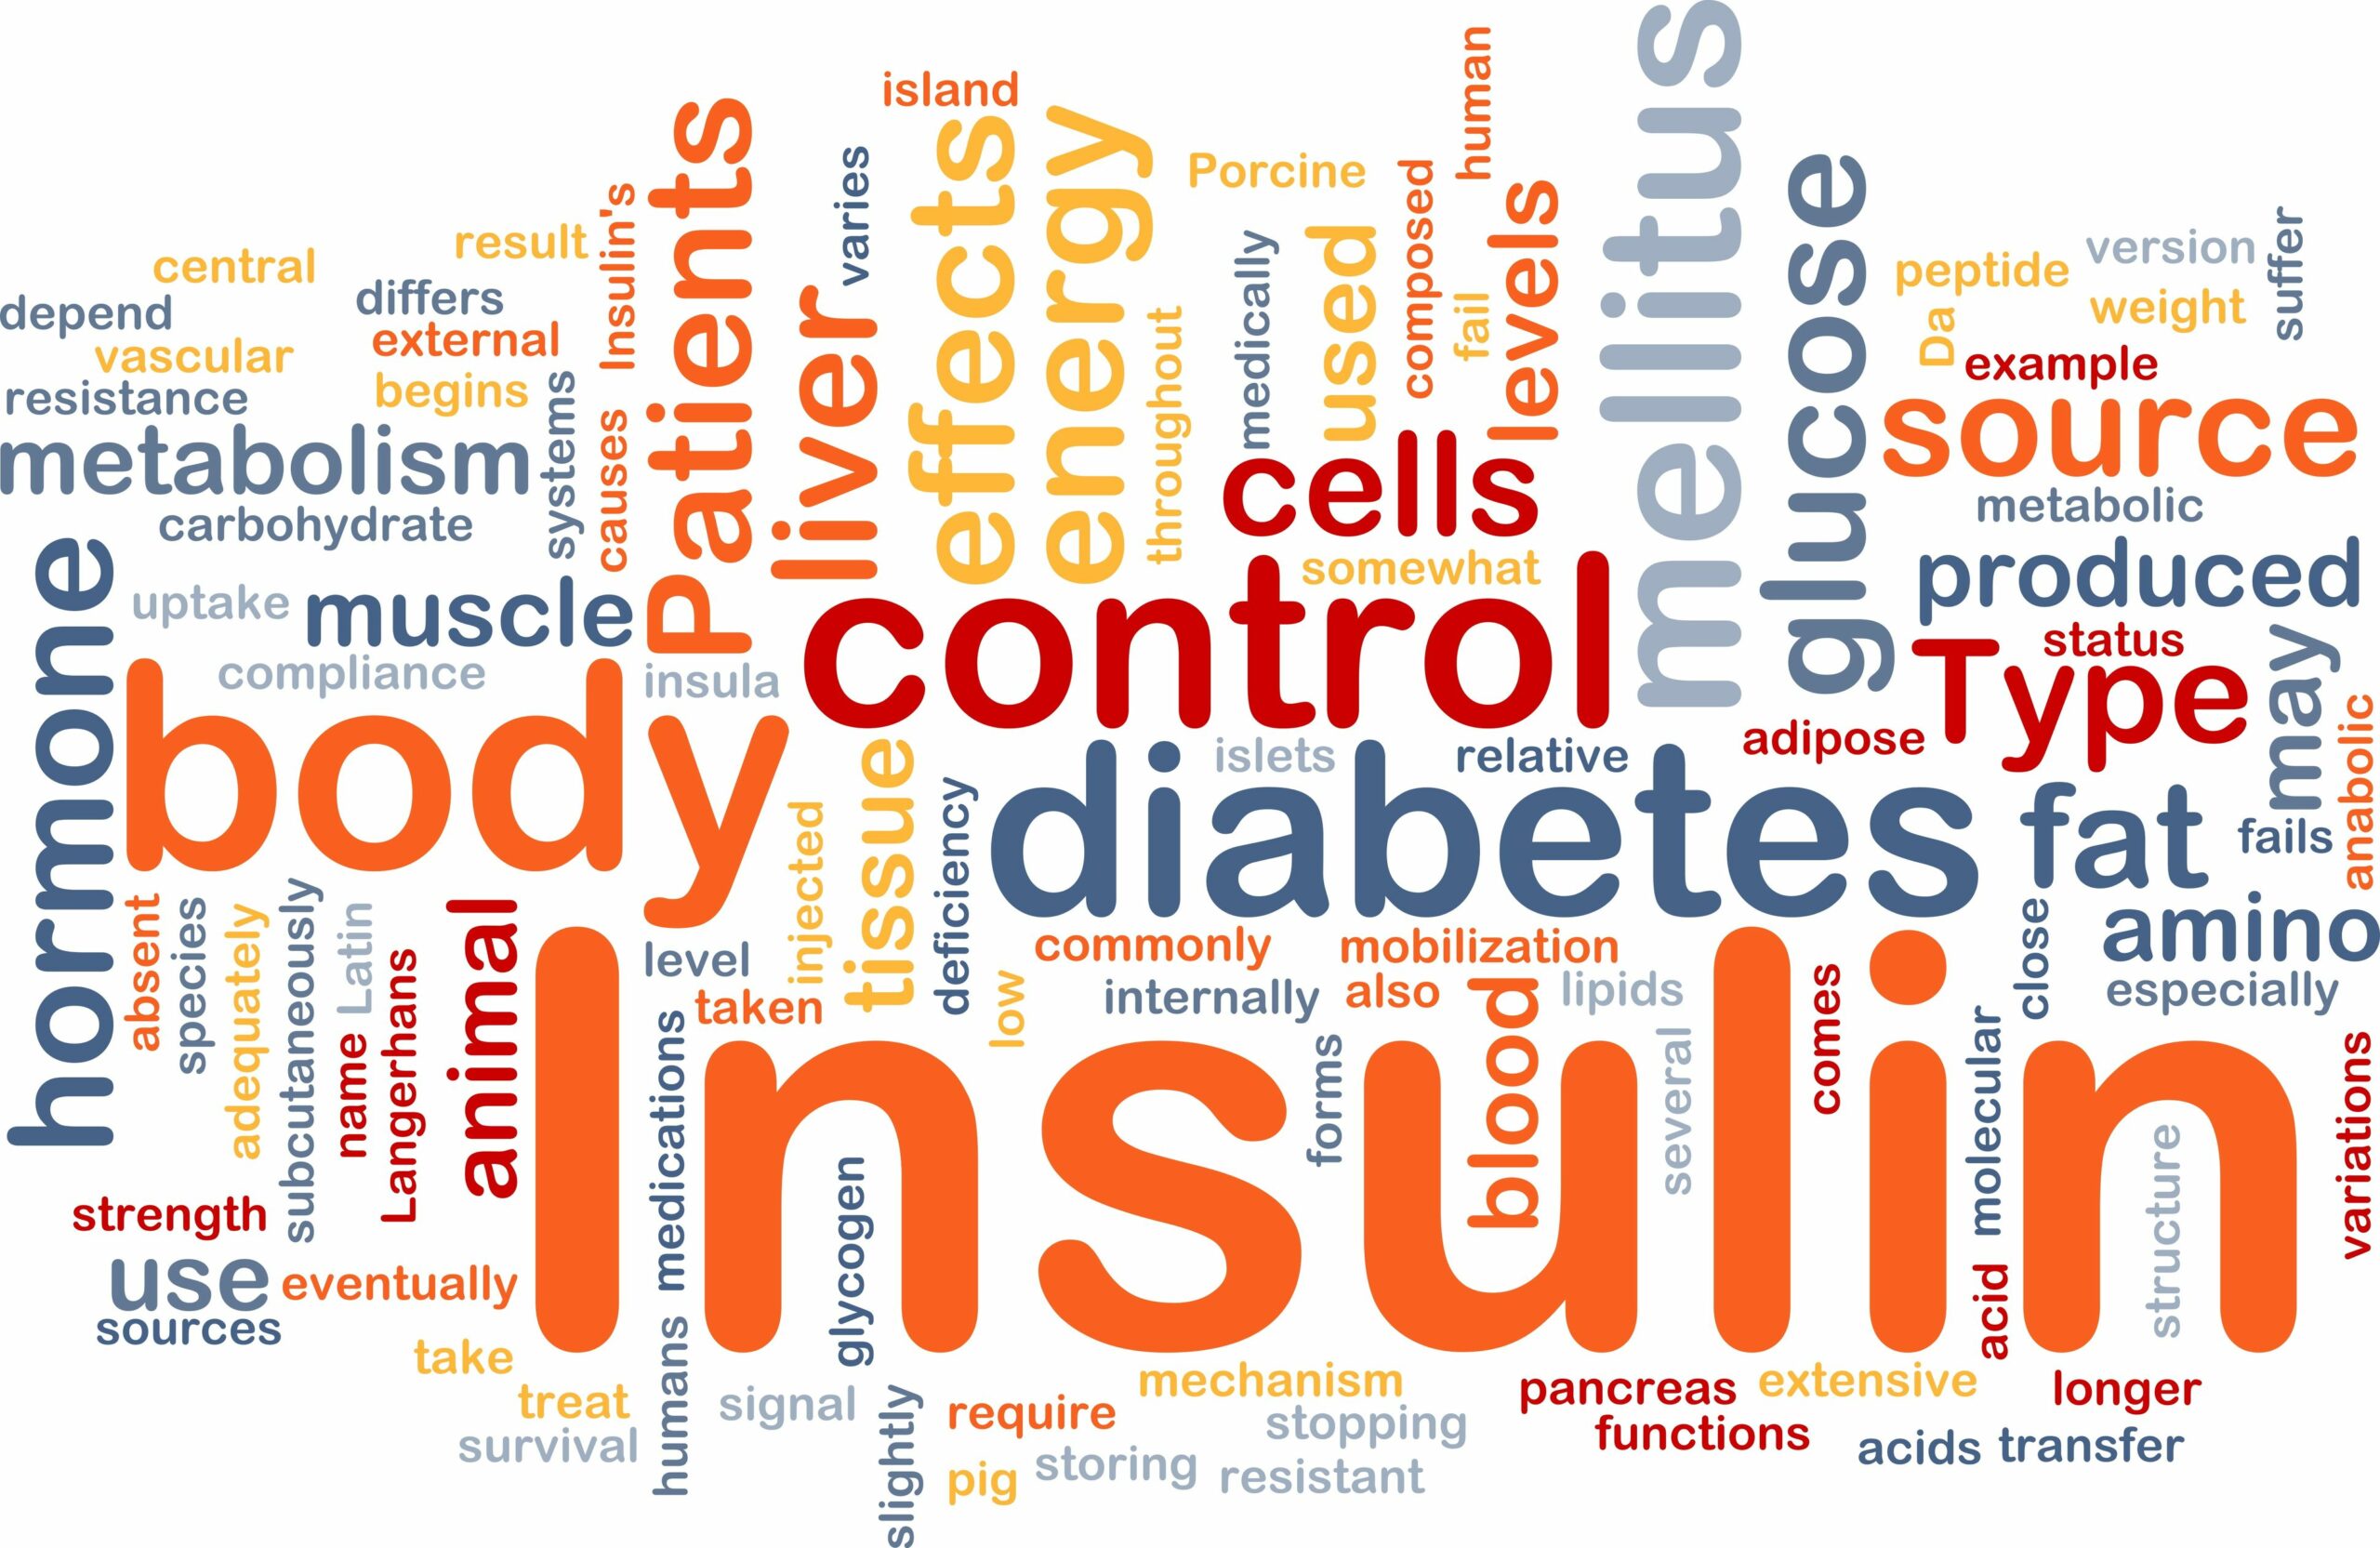 Insulin Resistance and Diabetes Type II